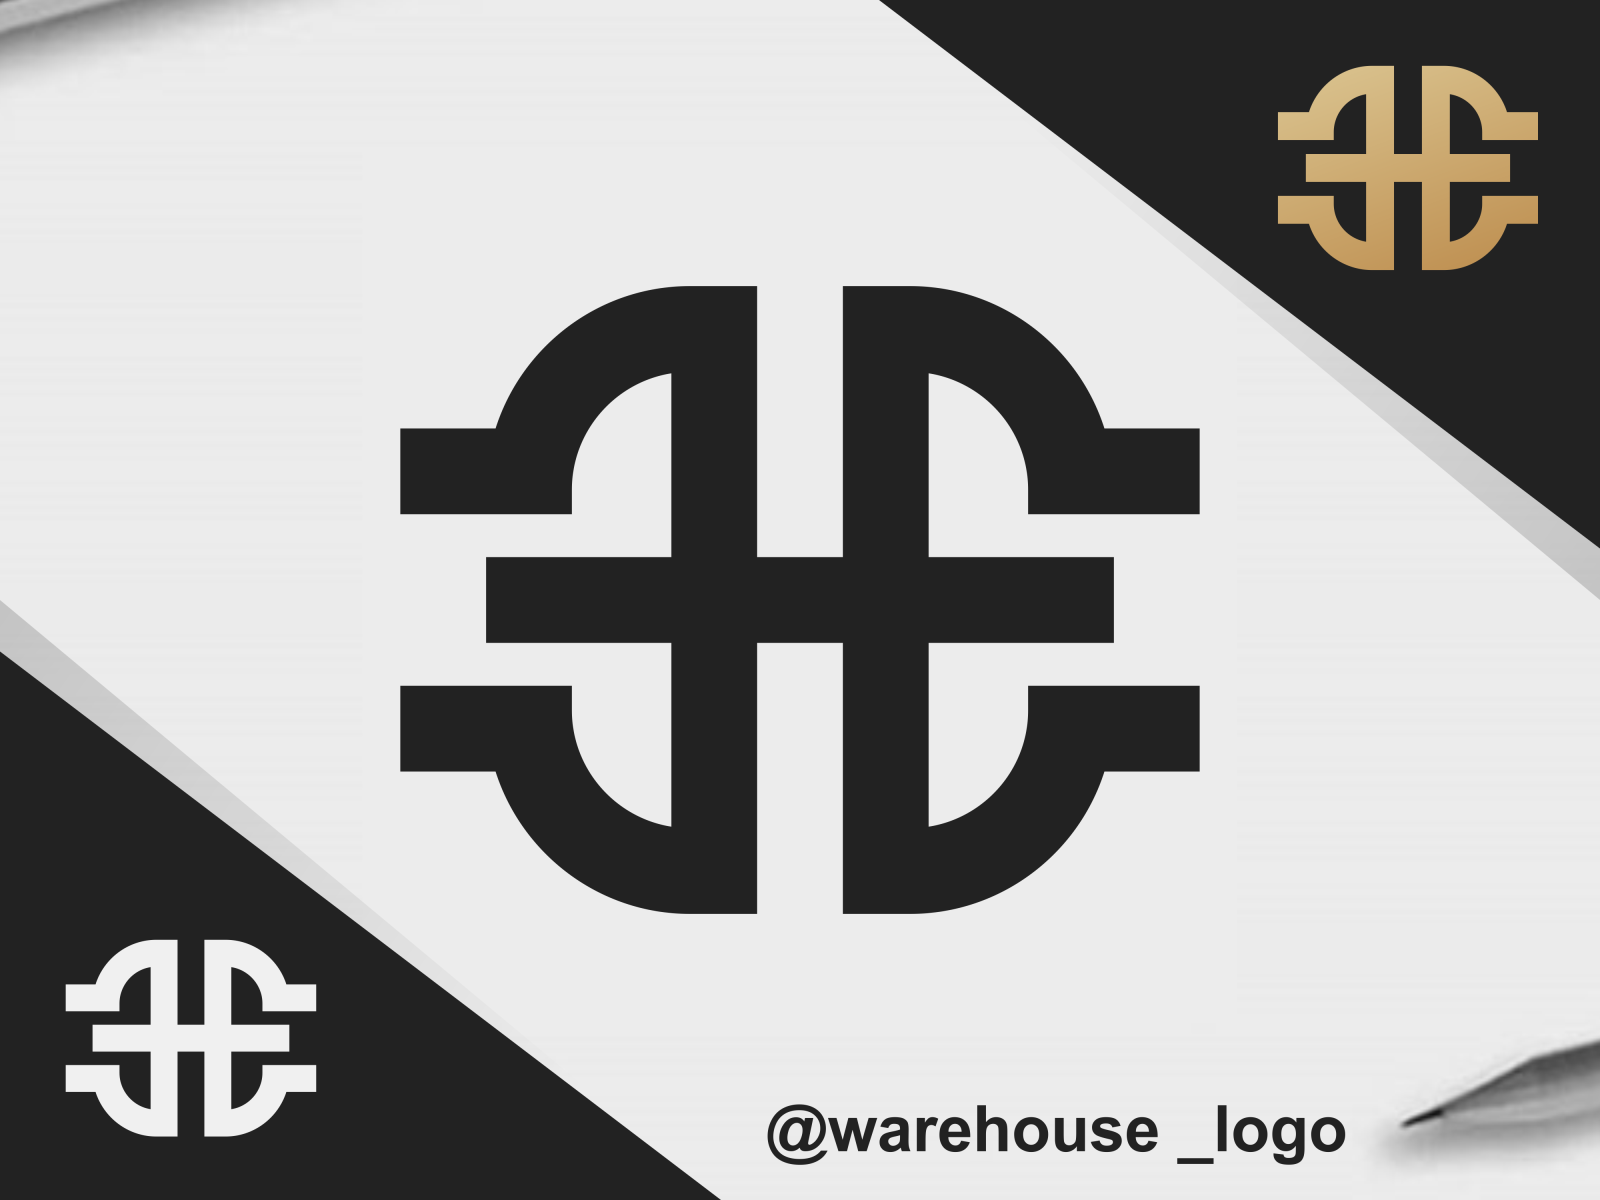  ee  logo by warehouse logo on Dribbble